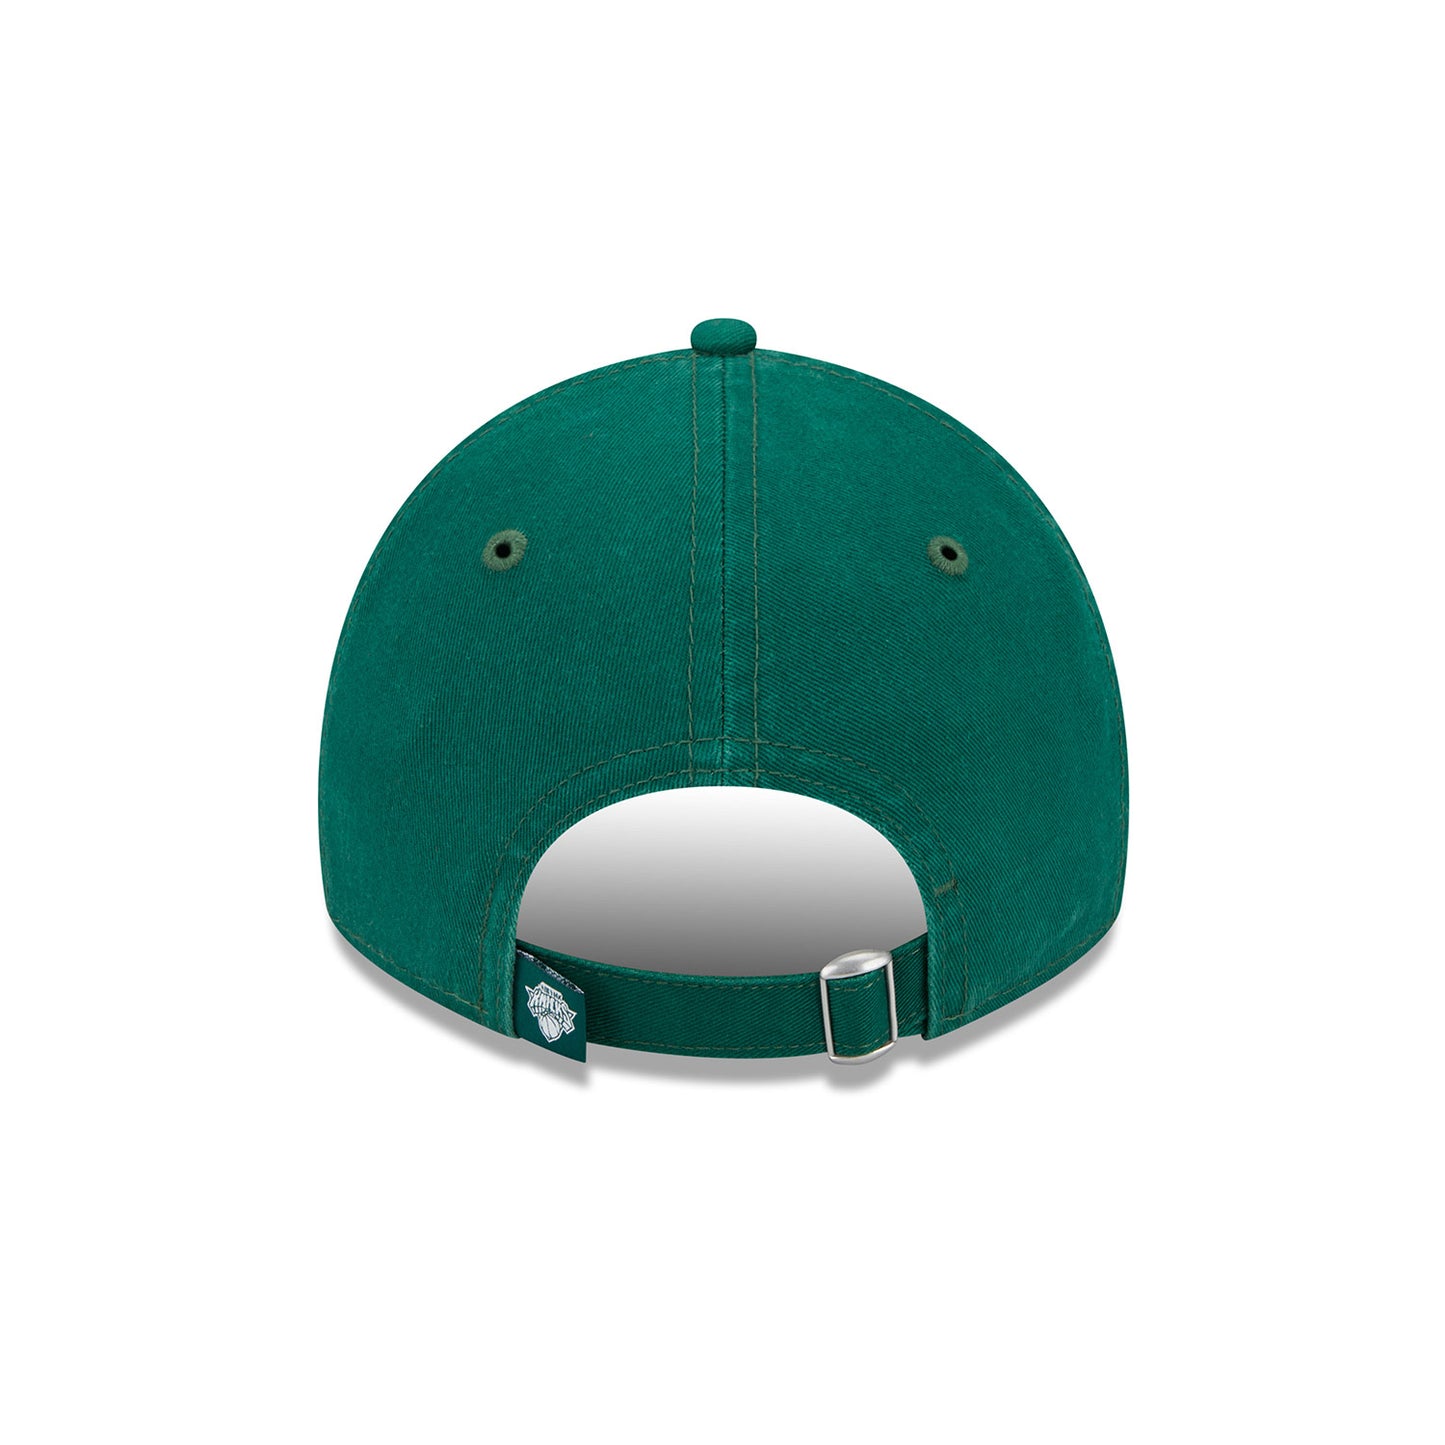 New Era Knicks Golf Emerald Green Leaves Adjustable Hat - Back View